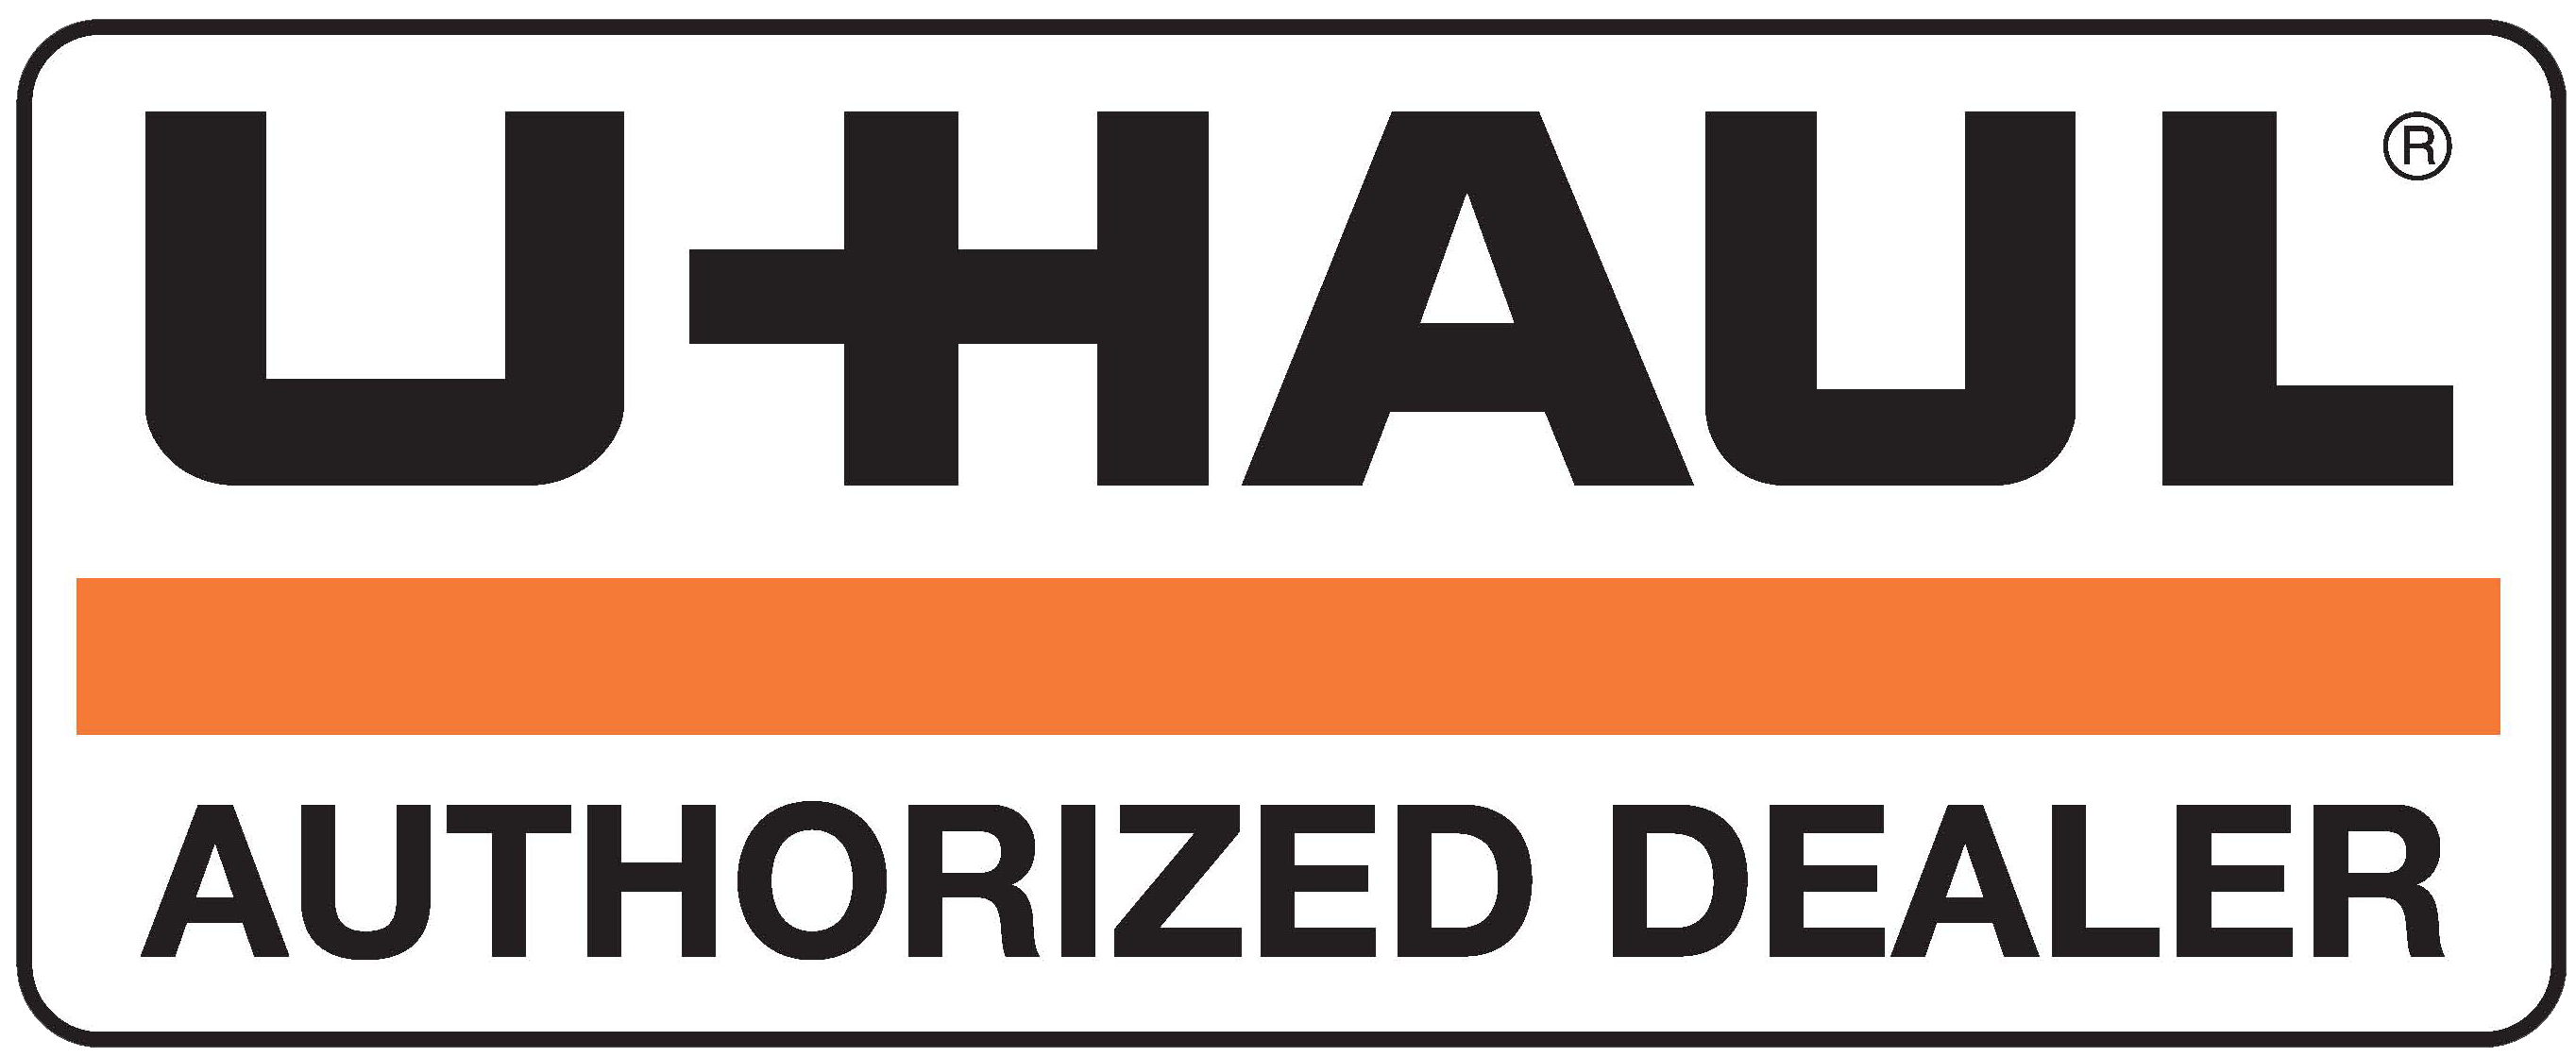 U-Haul Authorized Dealer